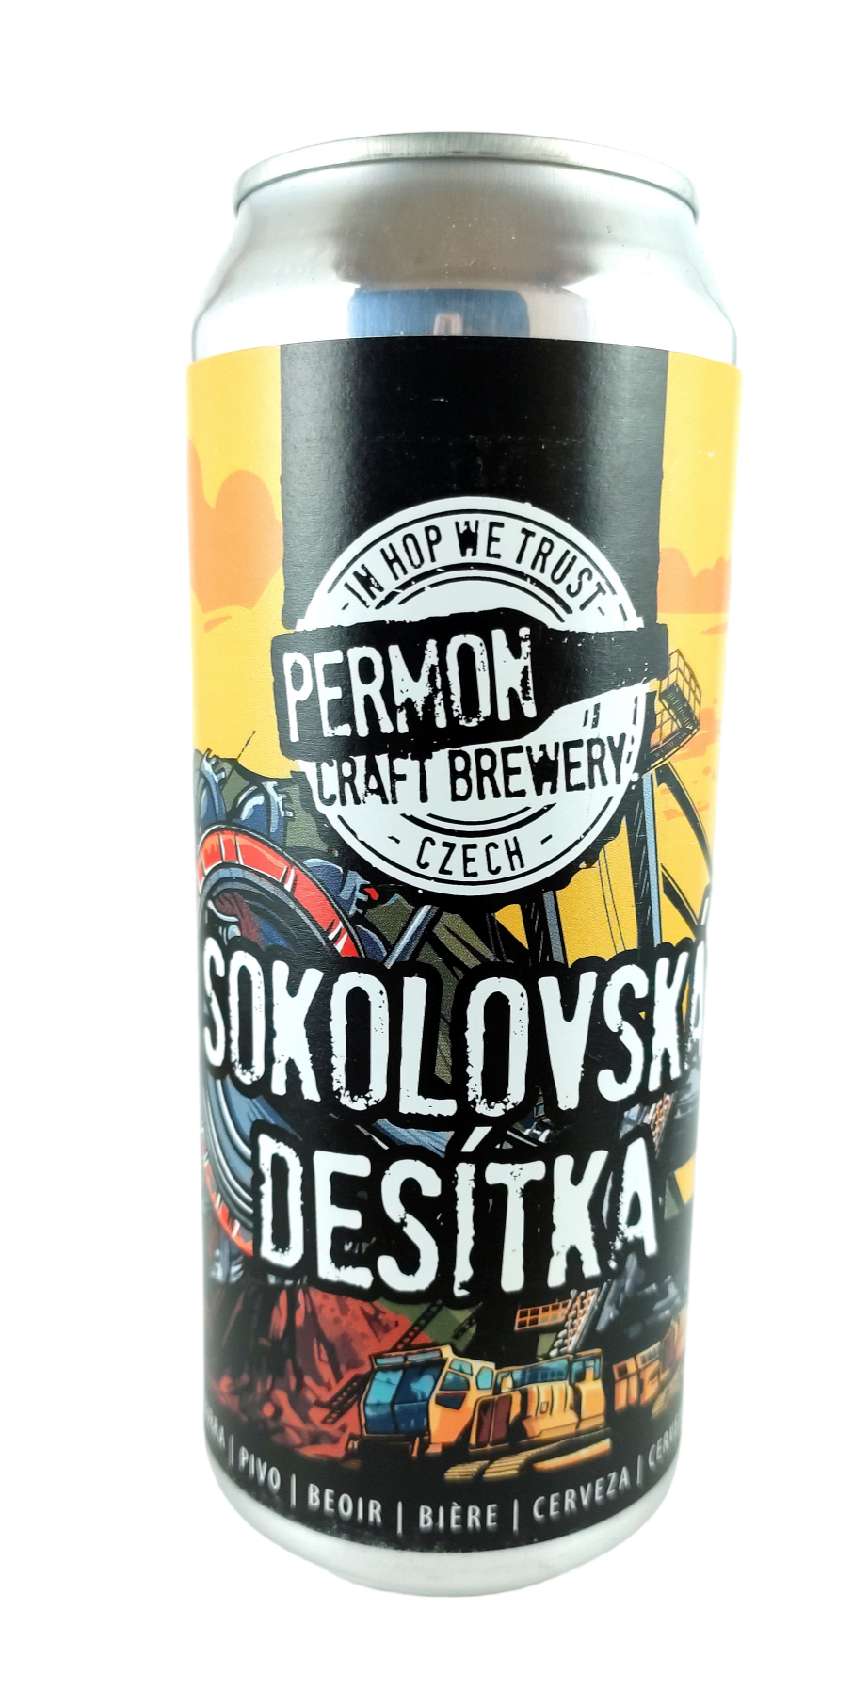 Permon Sokolovská desítka 10°